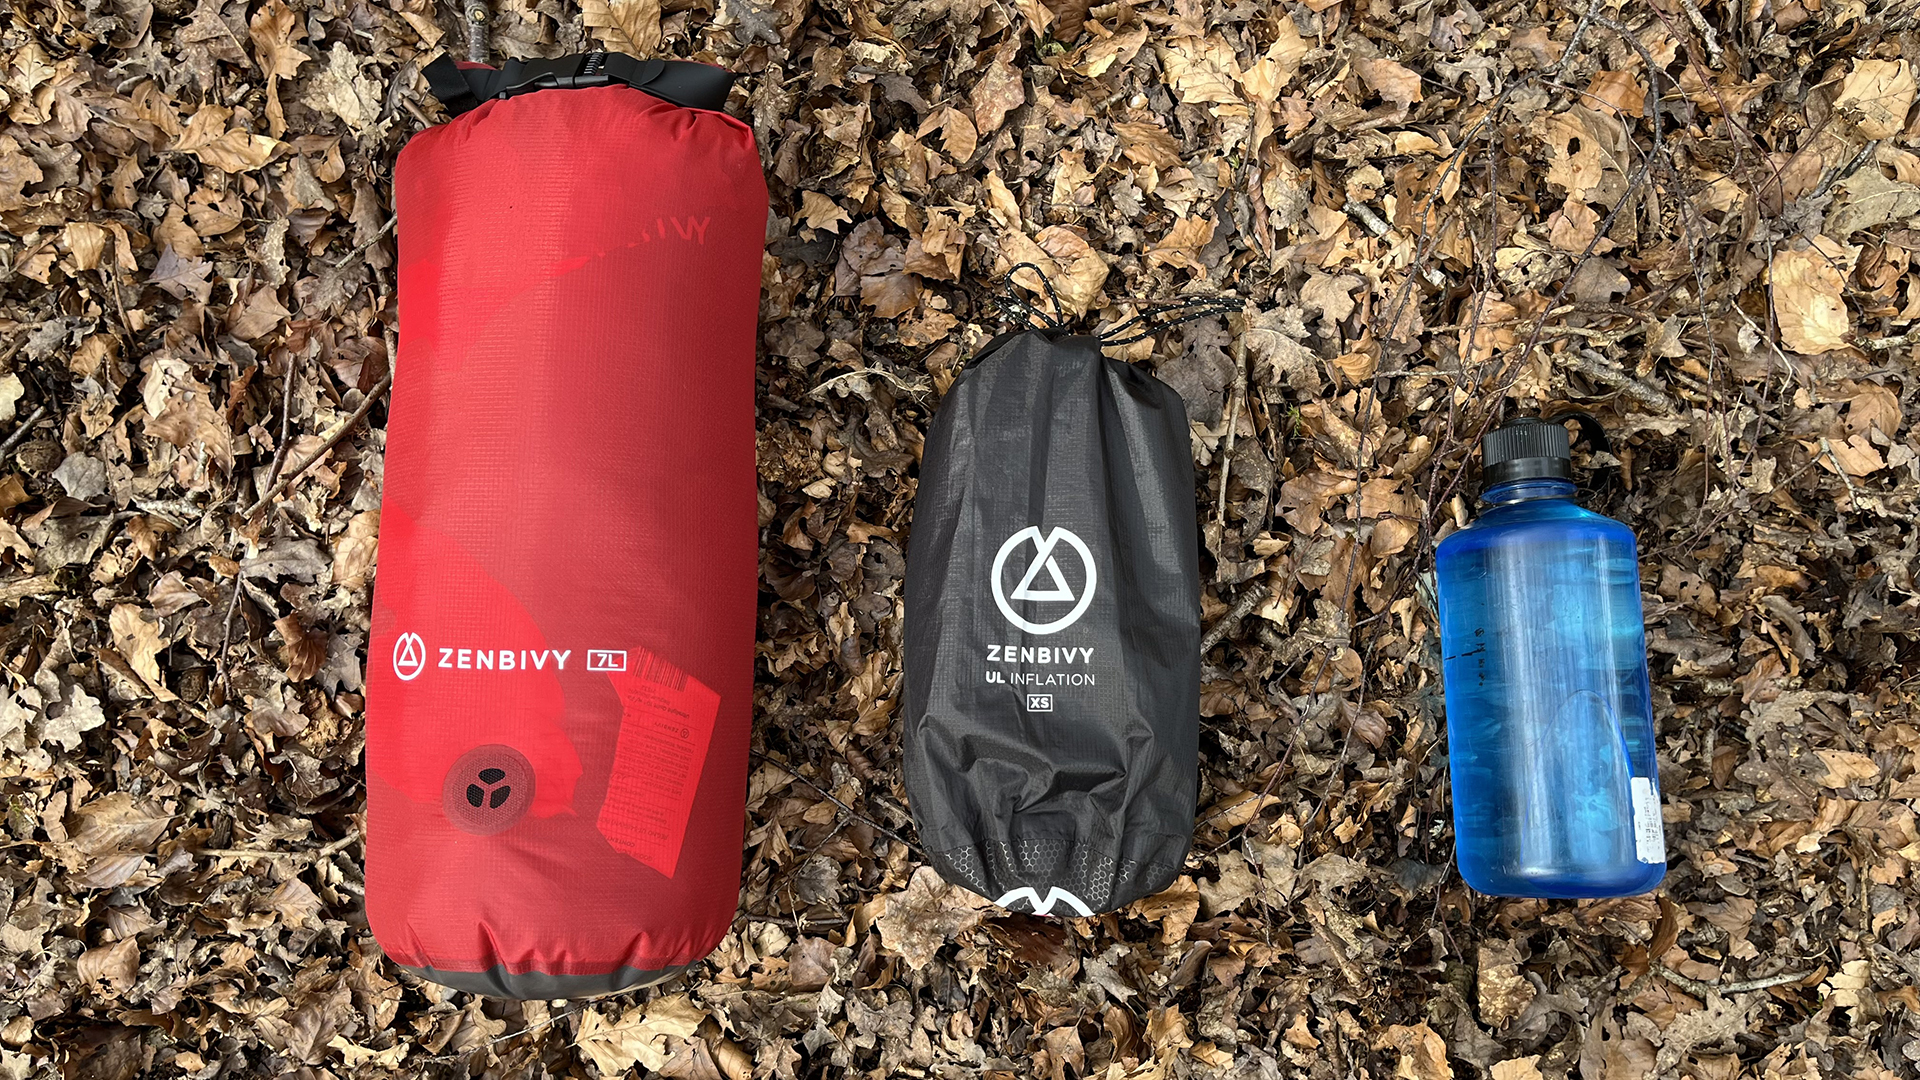 A Zenbivy stuff sack, uninflated mattress and water bottle on a floor of fallen leaves.